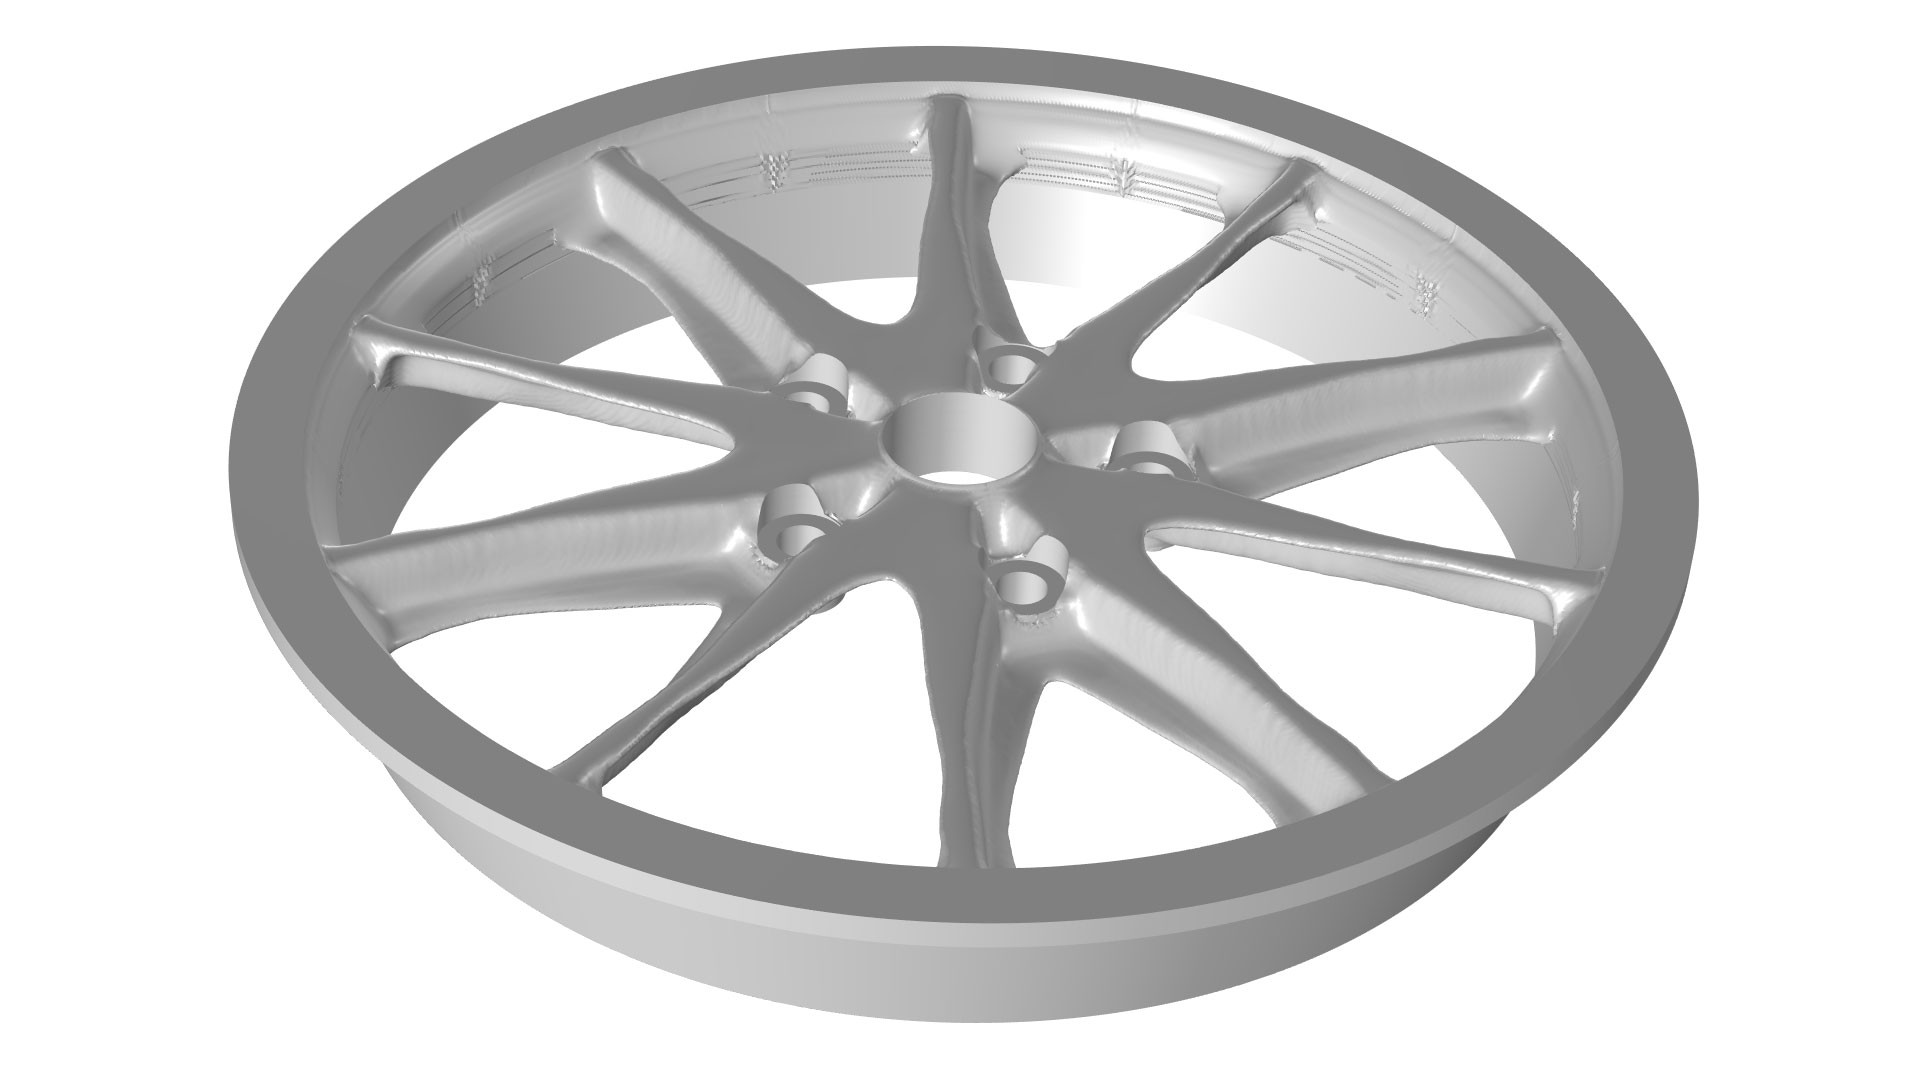 An optimized gray wheel rim model with ten sectors.